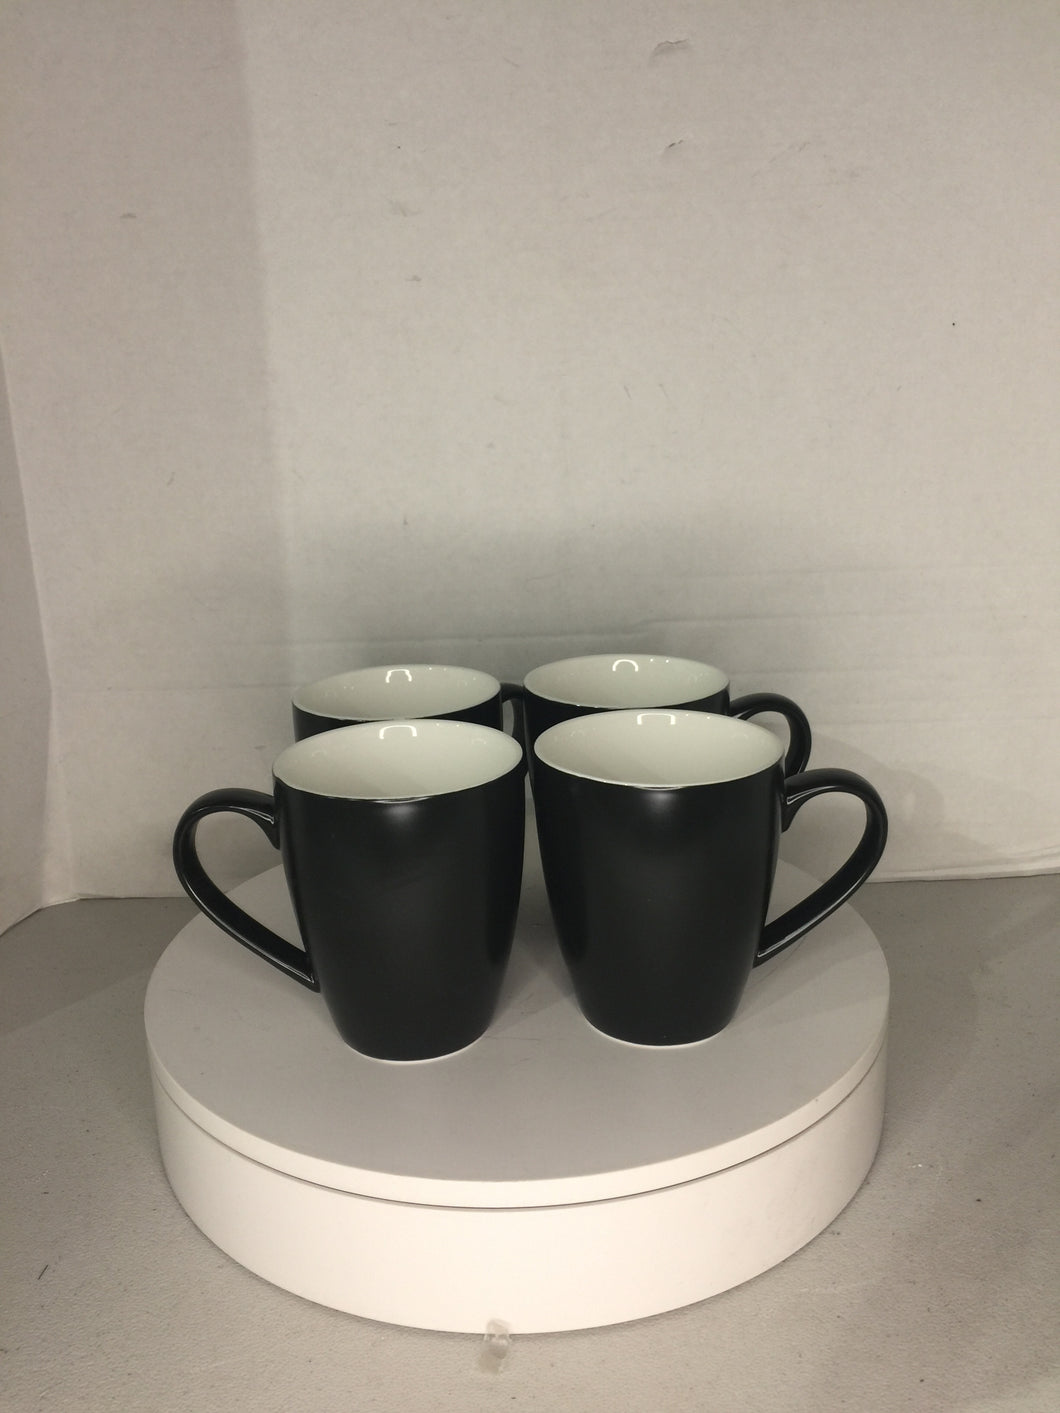 Sweese 601.414 Porcelain Mugs - 16 Ounce (Top to the Rim) for Coffee, Tea, Cocoa - FreemanLiquidators